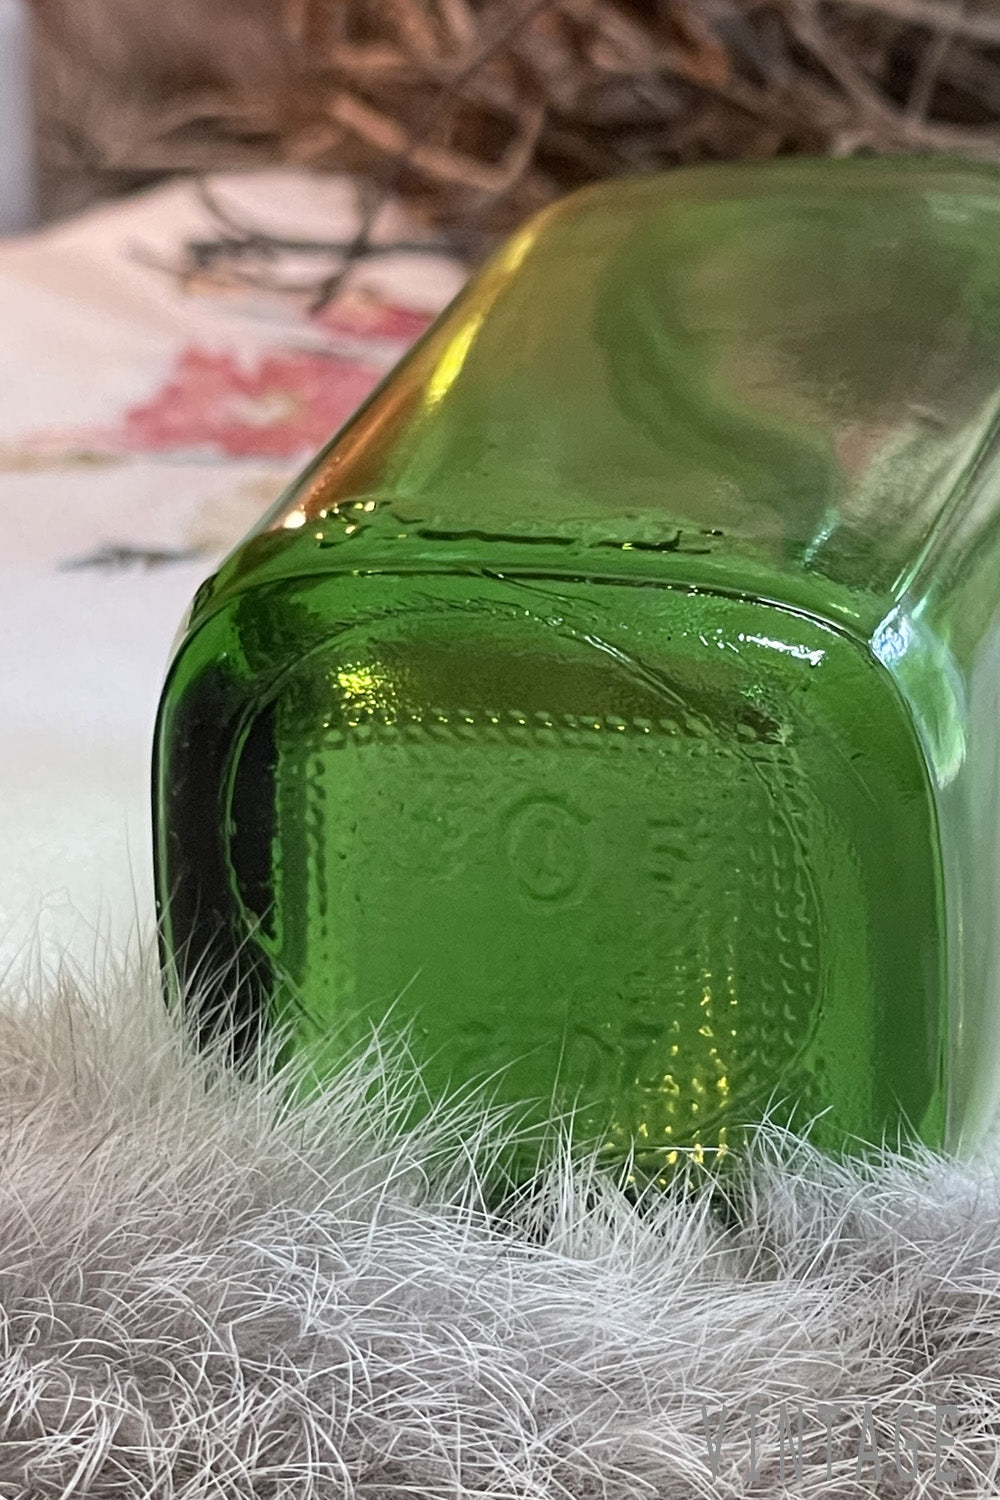 vintage green square apothecary bottle 2 oz